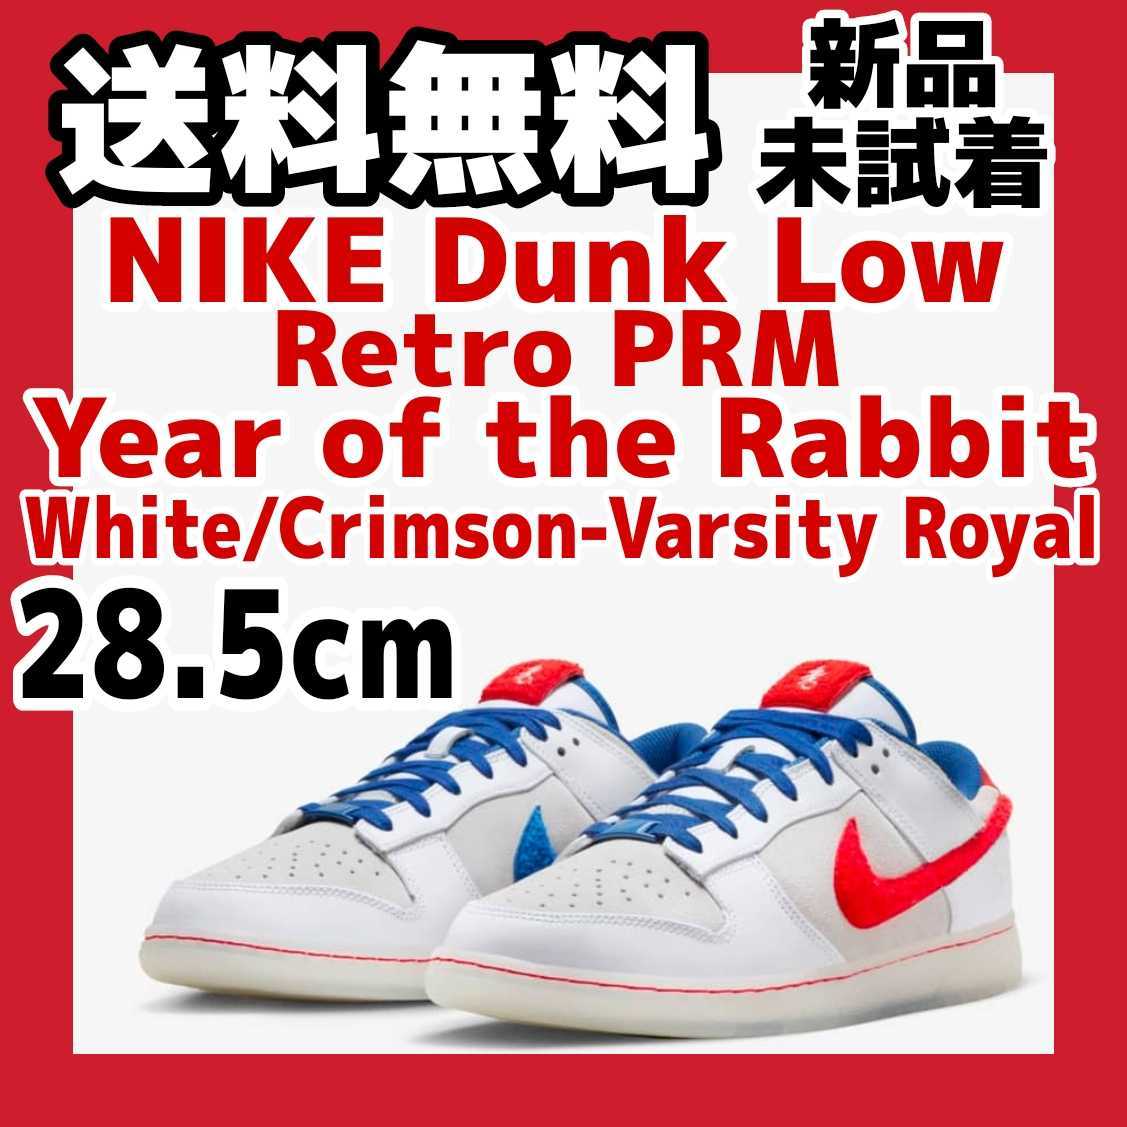 28.5cm Nike Dunk Low Year of the Rabbit White Crimson-Varsity Royal ナイキ ダンク  ロー イヤー オブ ザ ラビット ホワイト クリムゾン eprocurement-indonesia.com